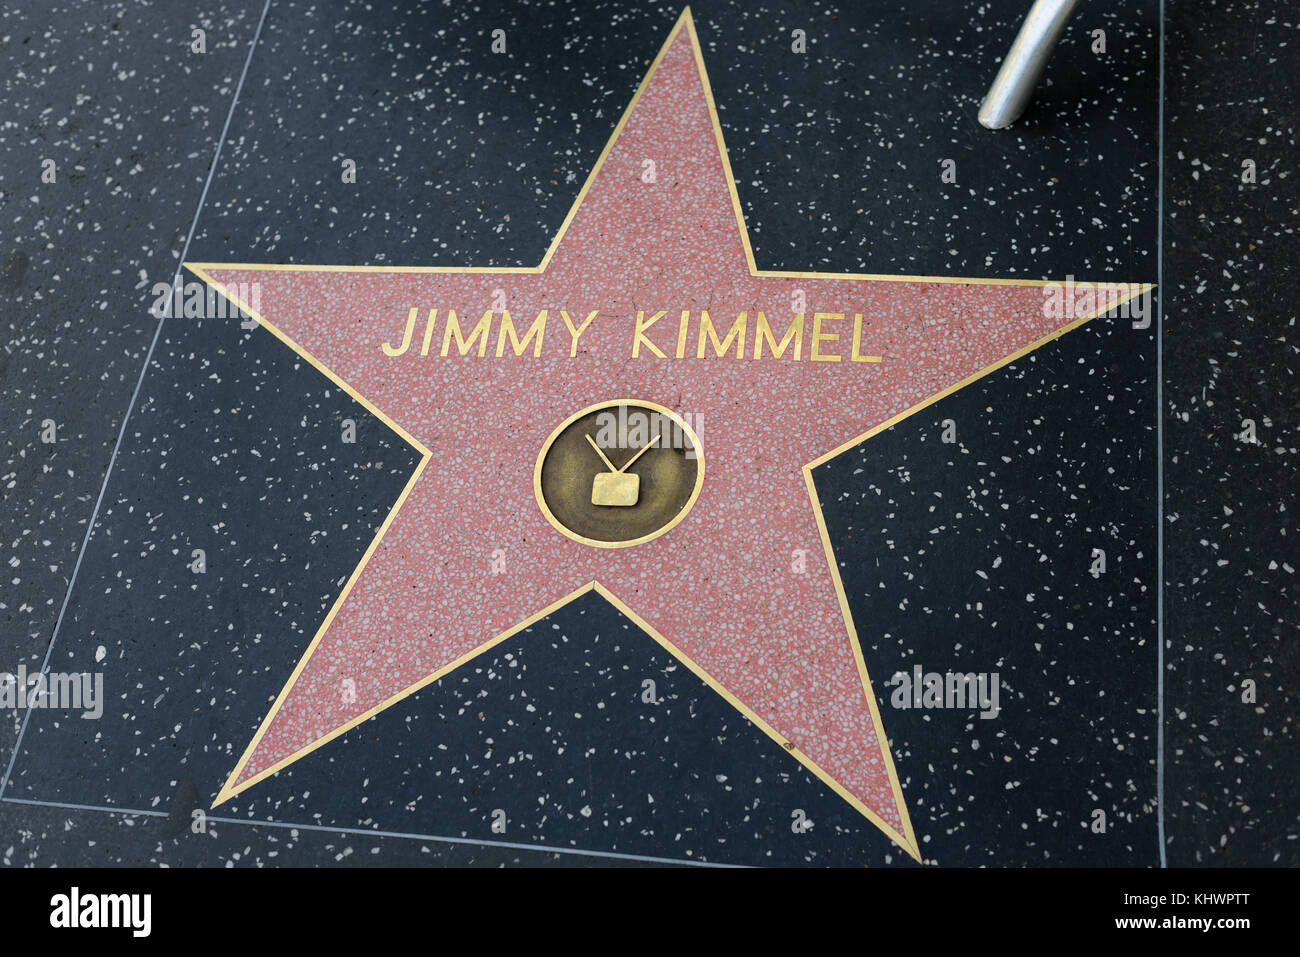 HOLLYWOOD, CA - DEZEMBER 06: Jimmy Kimmel Star auf dem Hollywood Walk of Fame in Hollywood, Kalifornien am 6. Dezember 2016. Stockfoto